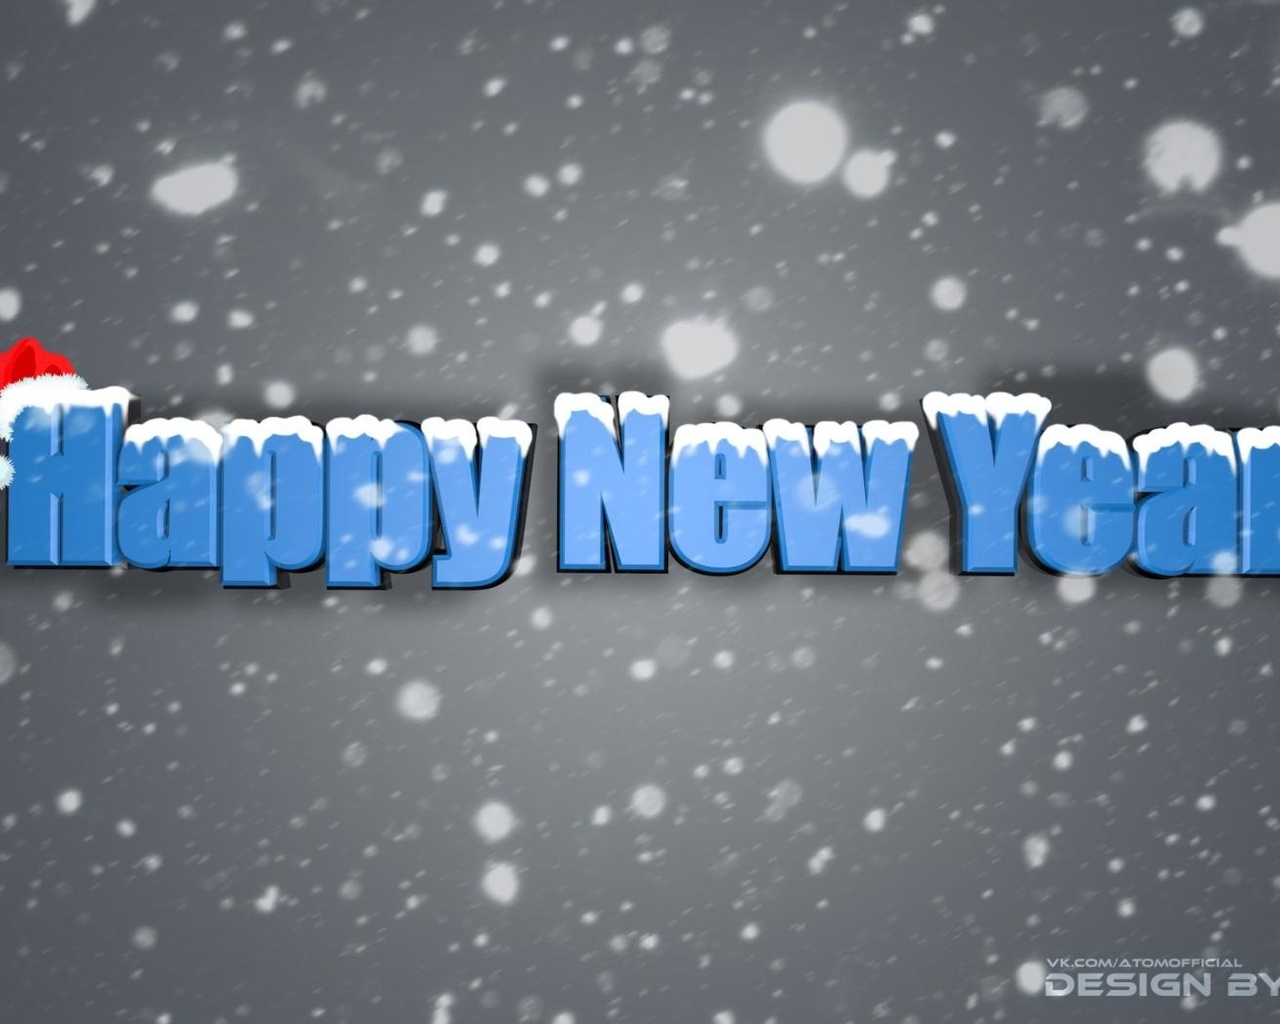   2013, new year 2013, happy new year